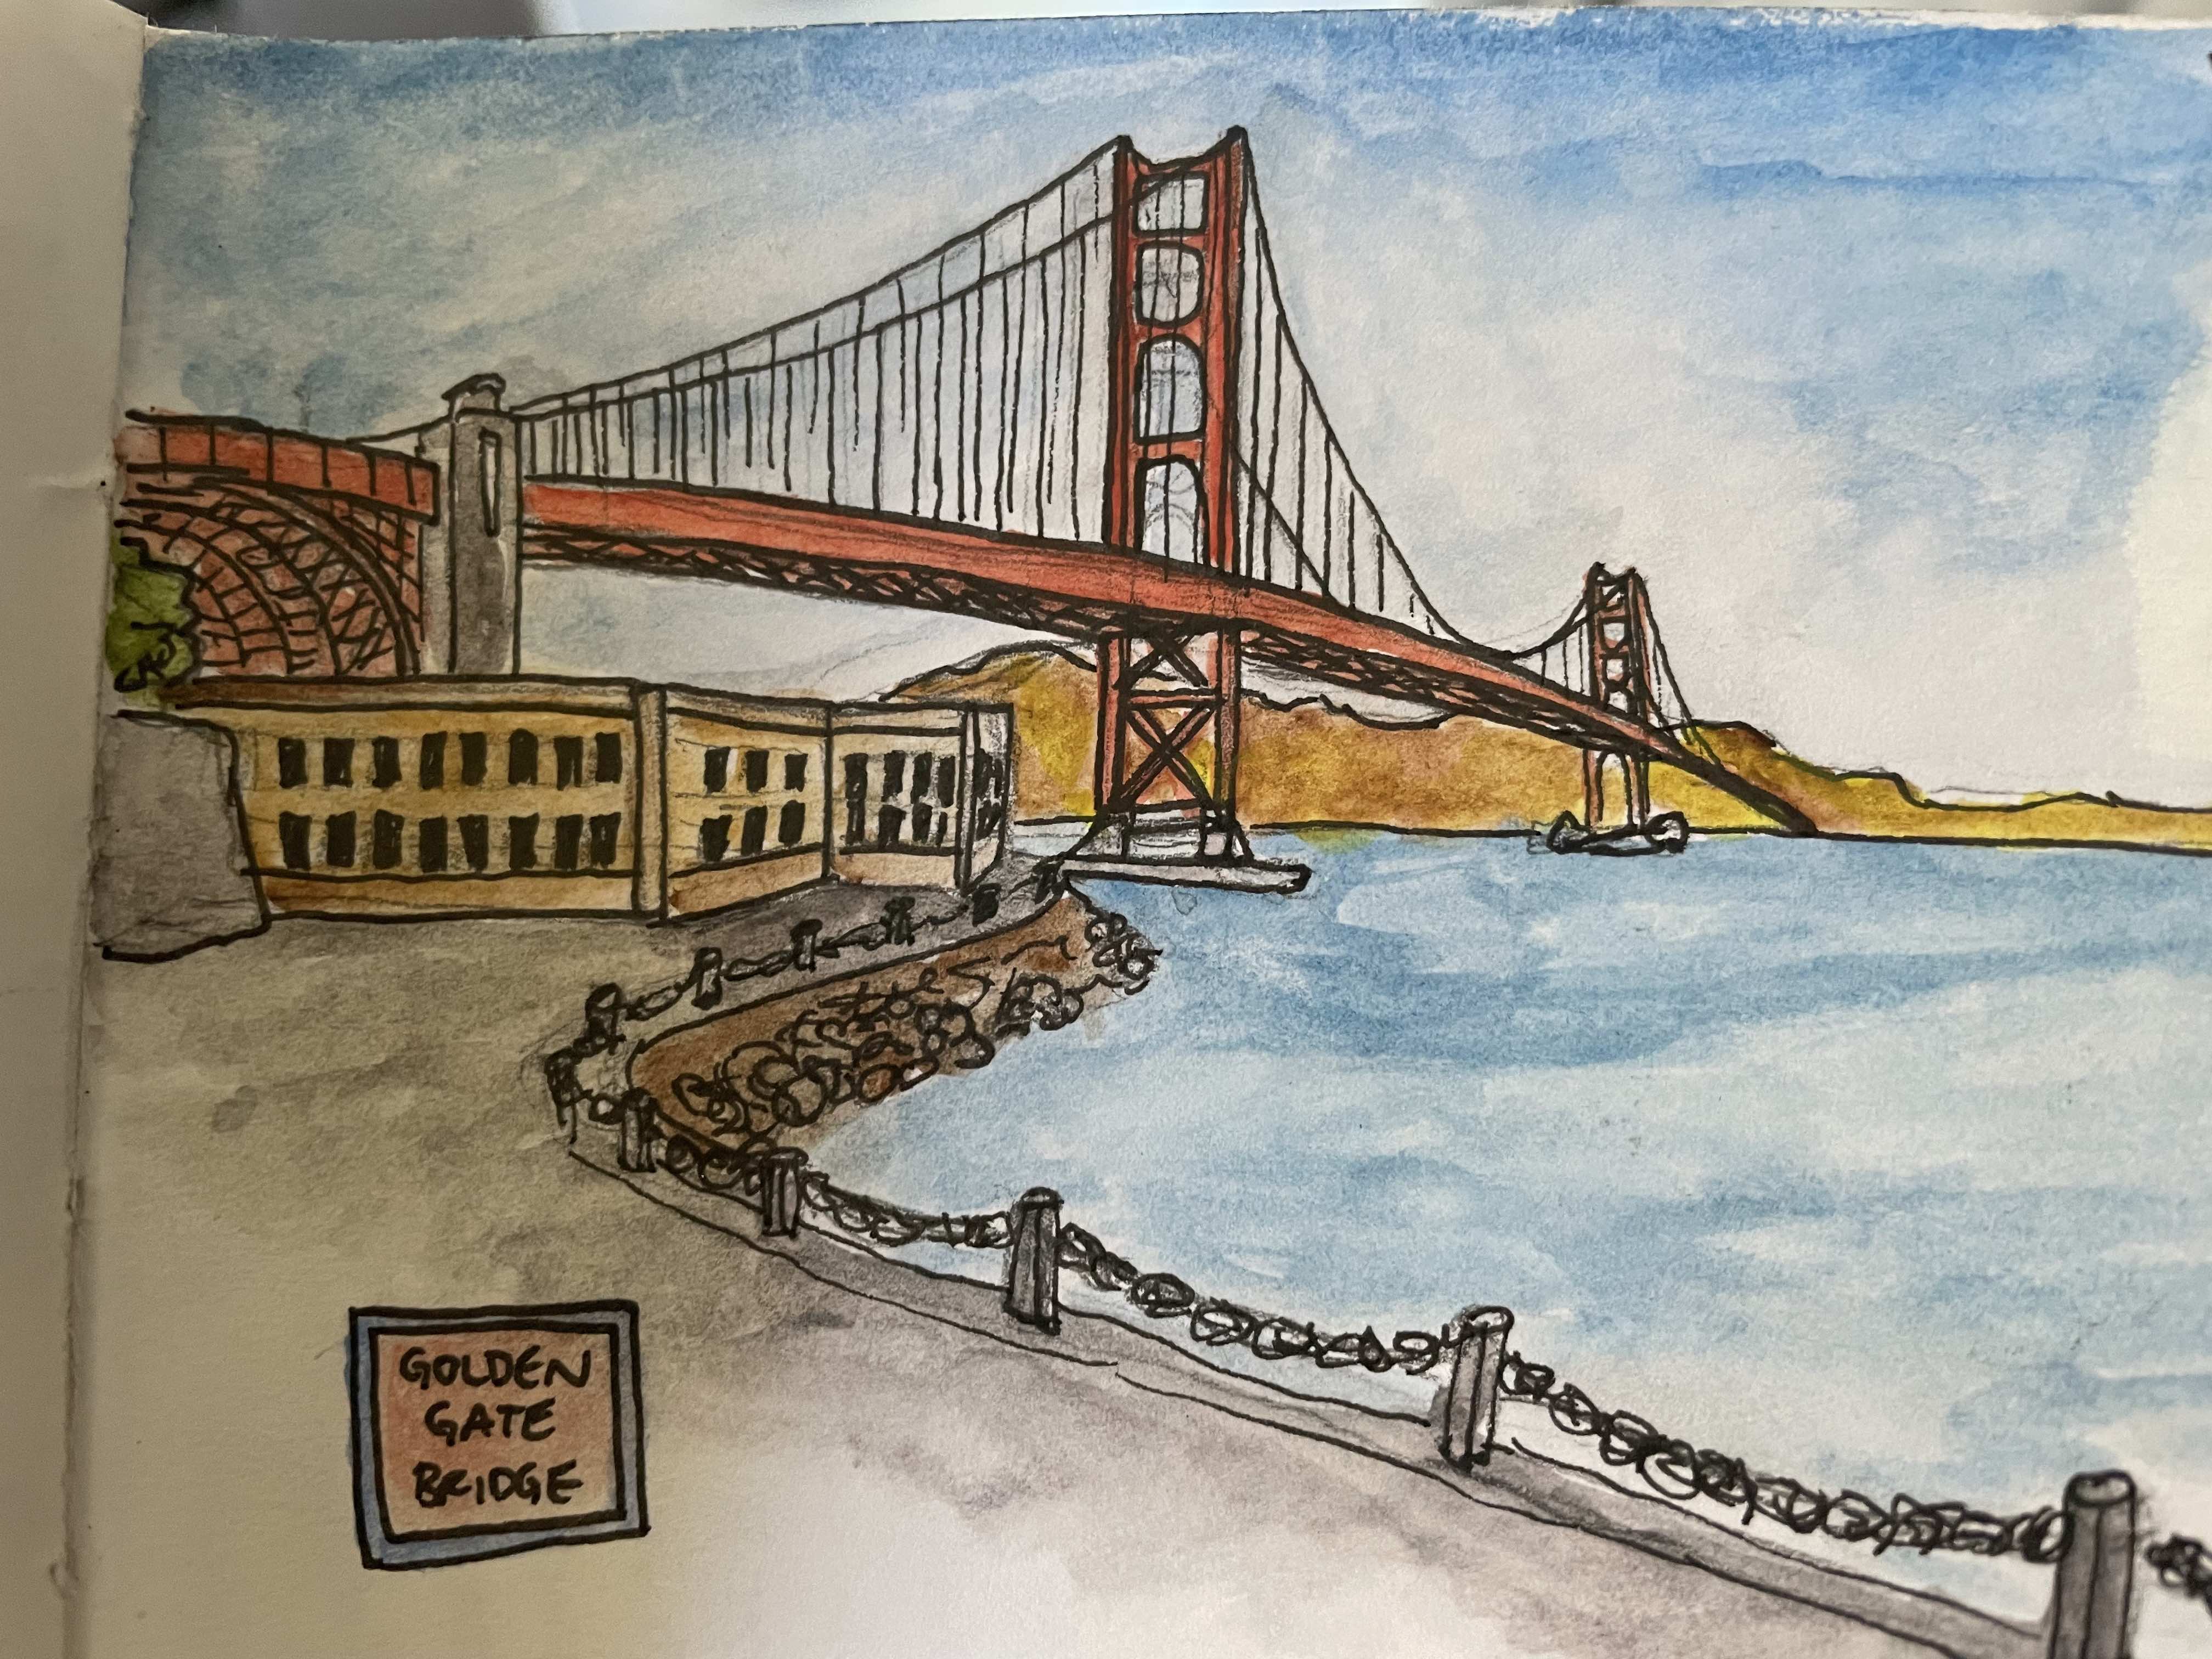 Sketch of the Golden Gate Bridge